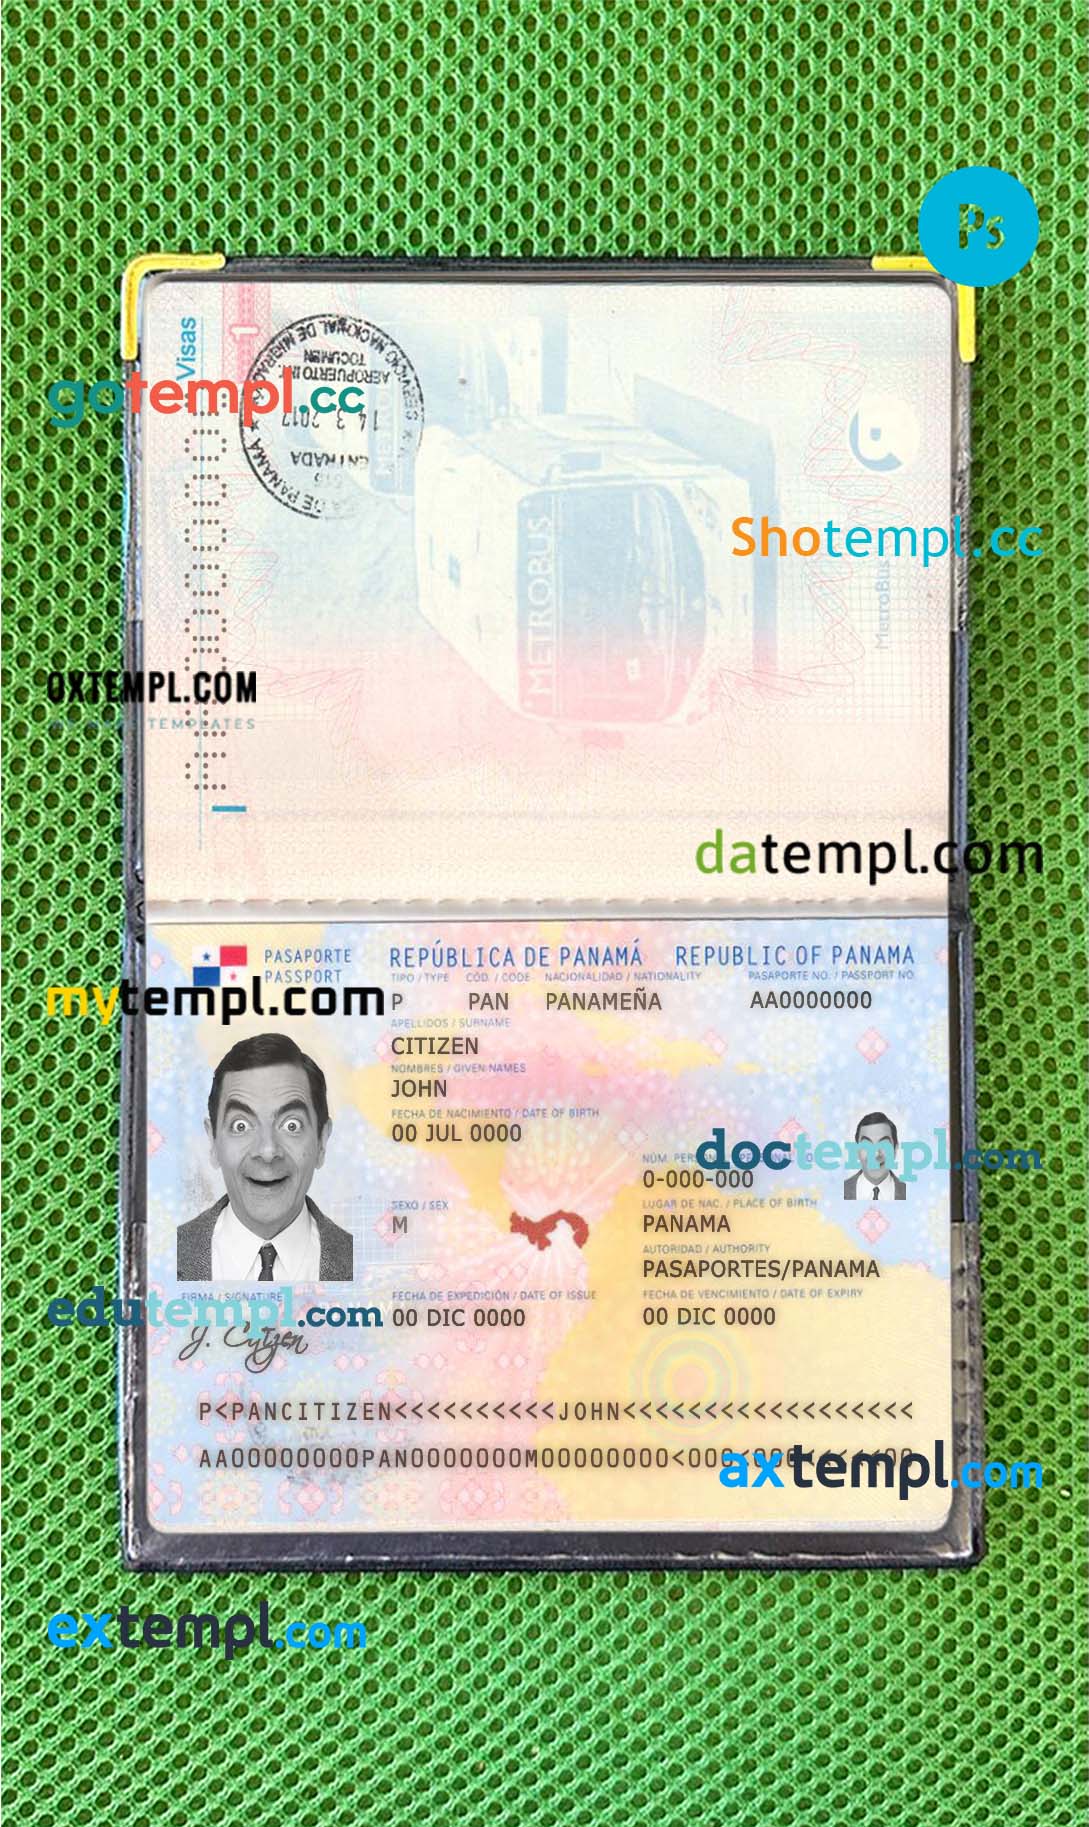 Kiribati driving license PSD files, scan look and photographed image, 2 in 1